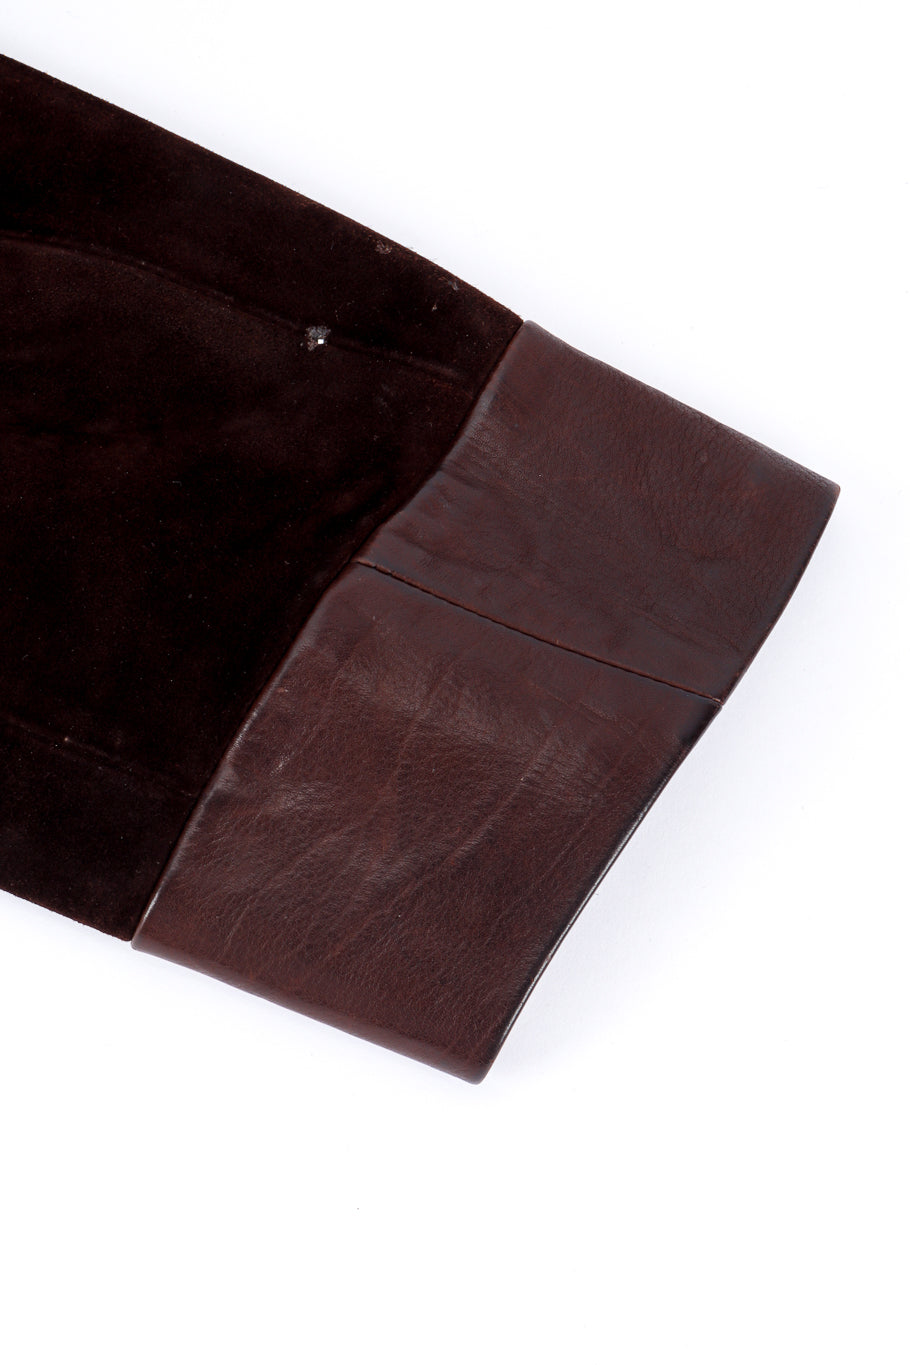 Vintage Gucci Suede and Leather Coat sleeve closeup @recessla